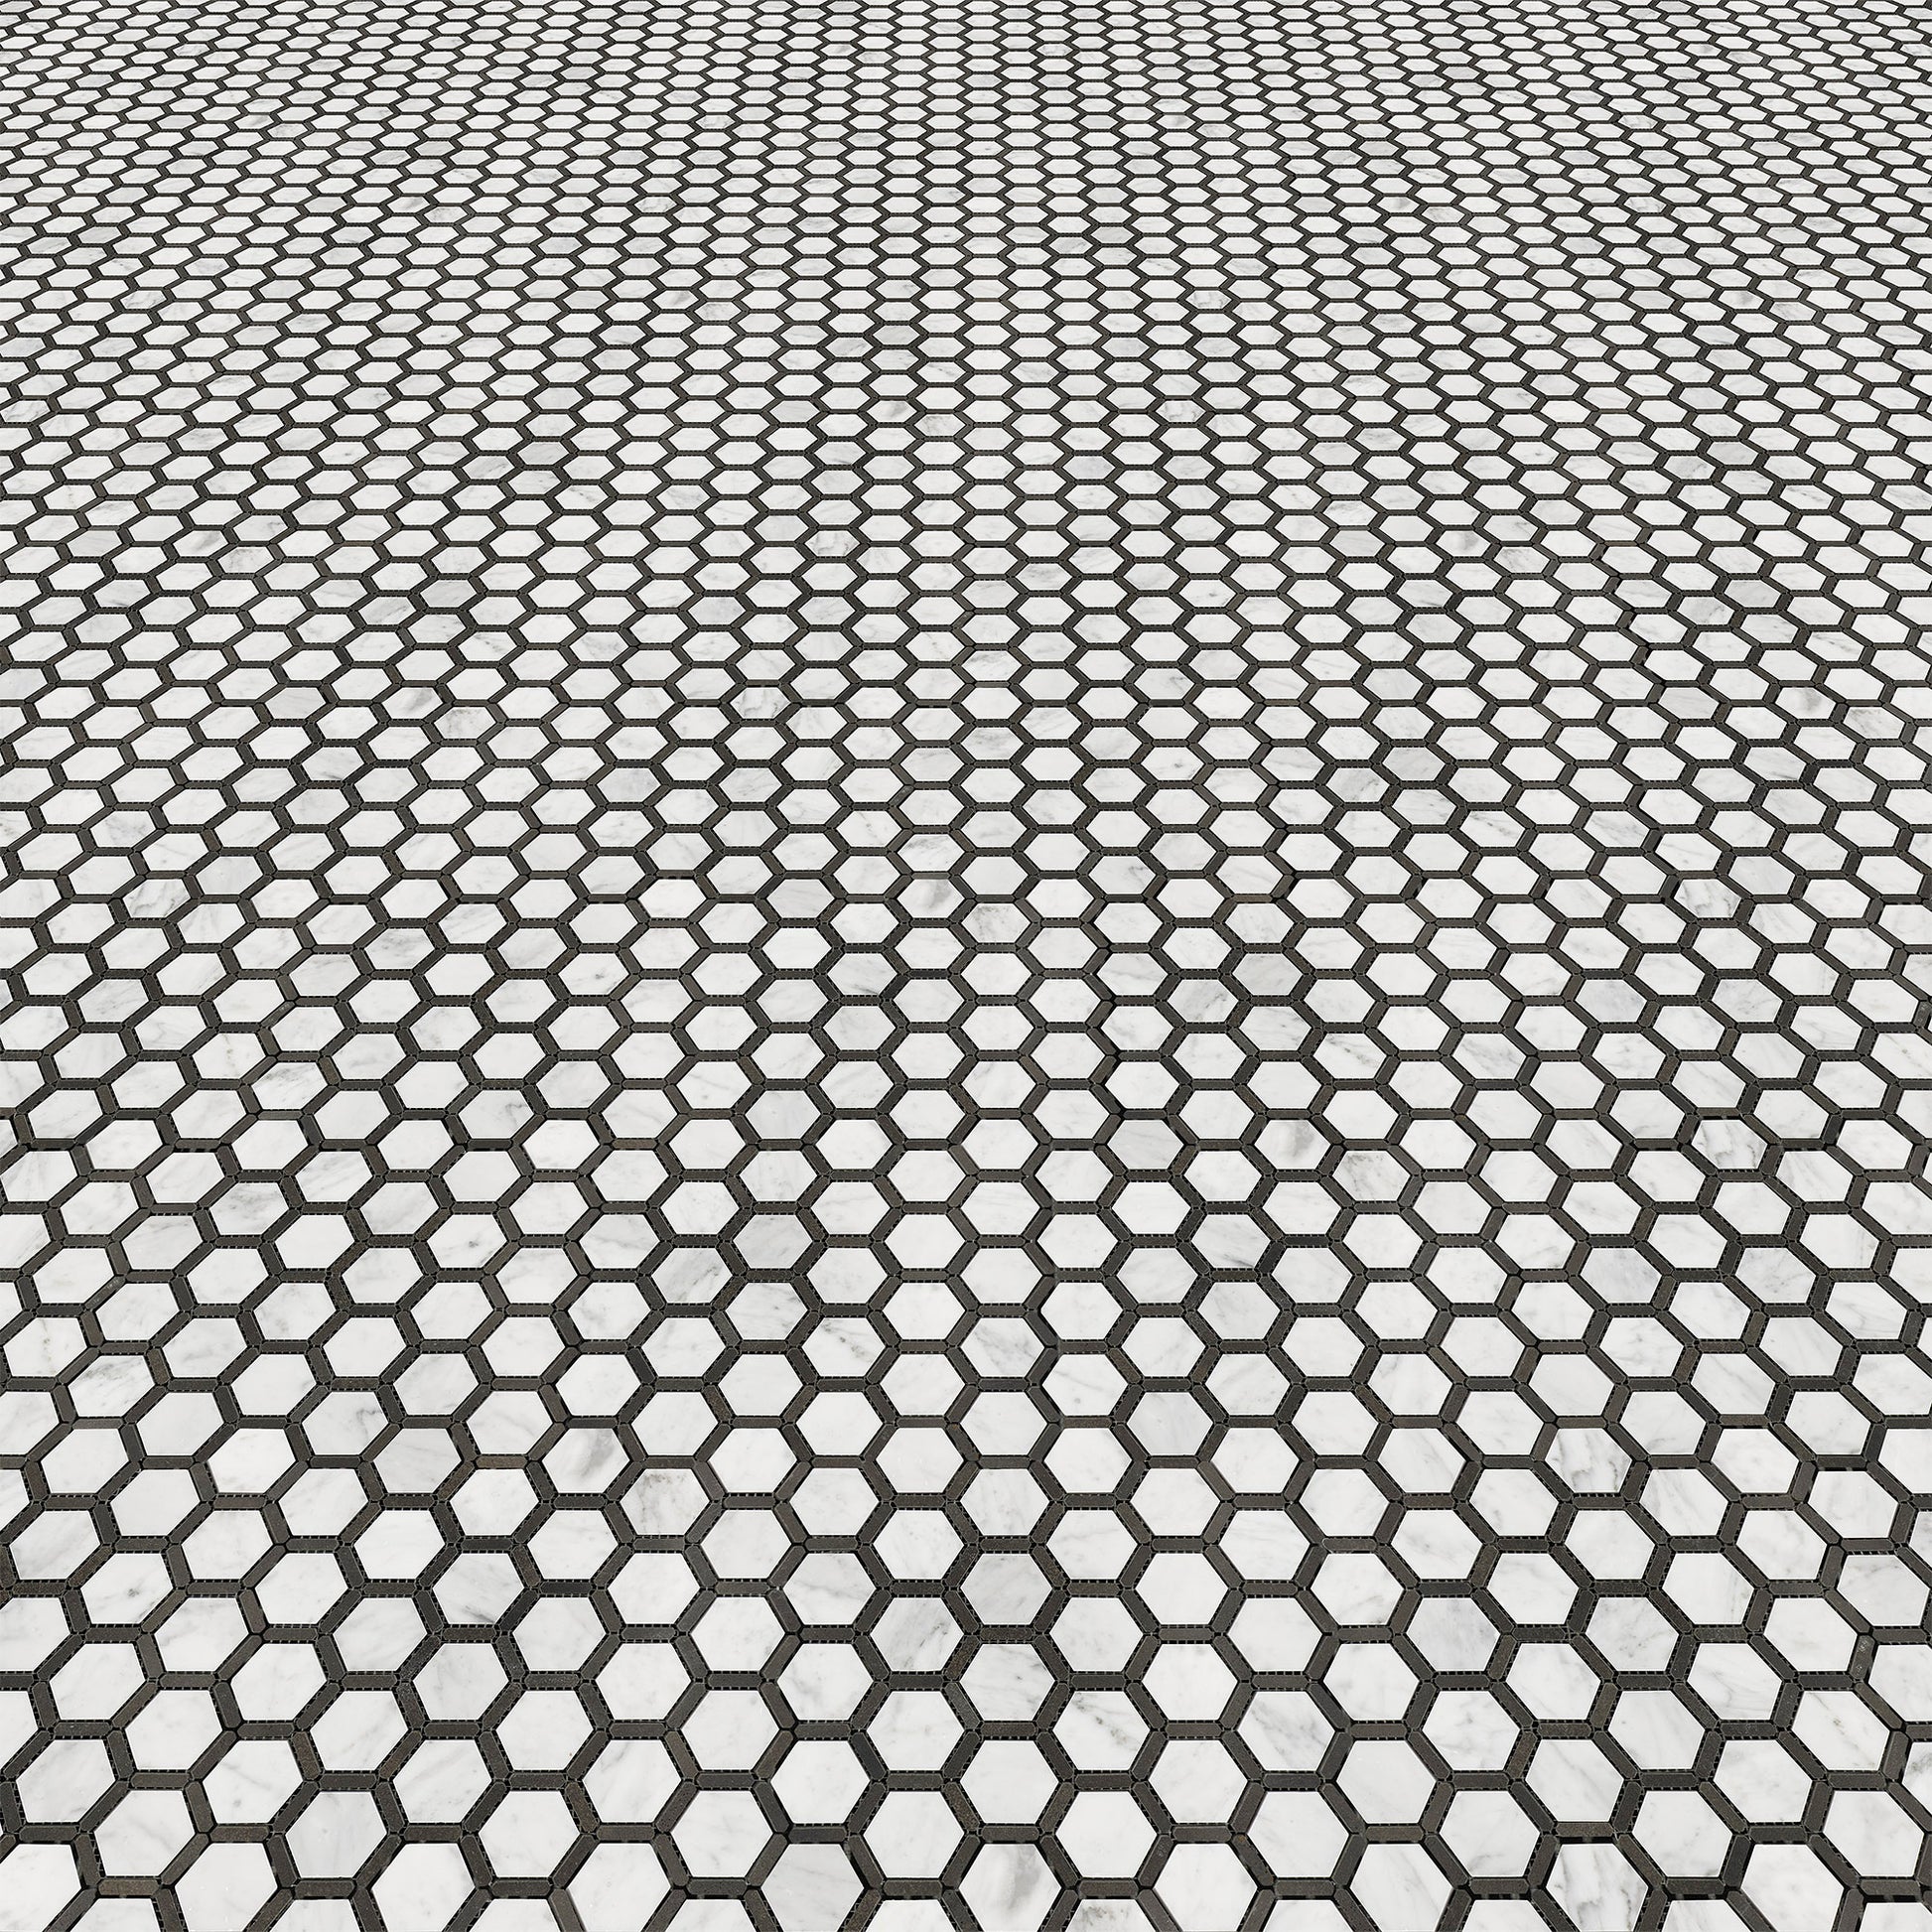 Honeycomb Carrara & Black Marble  - Polished Floor & Wall Mosaic